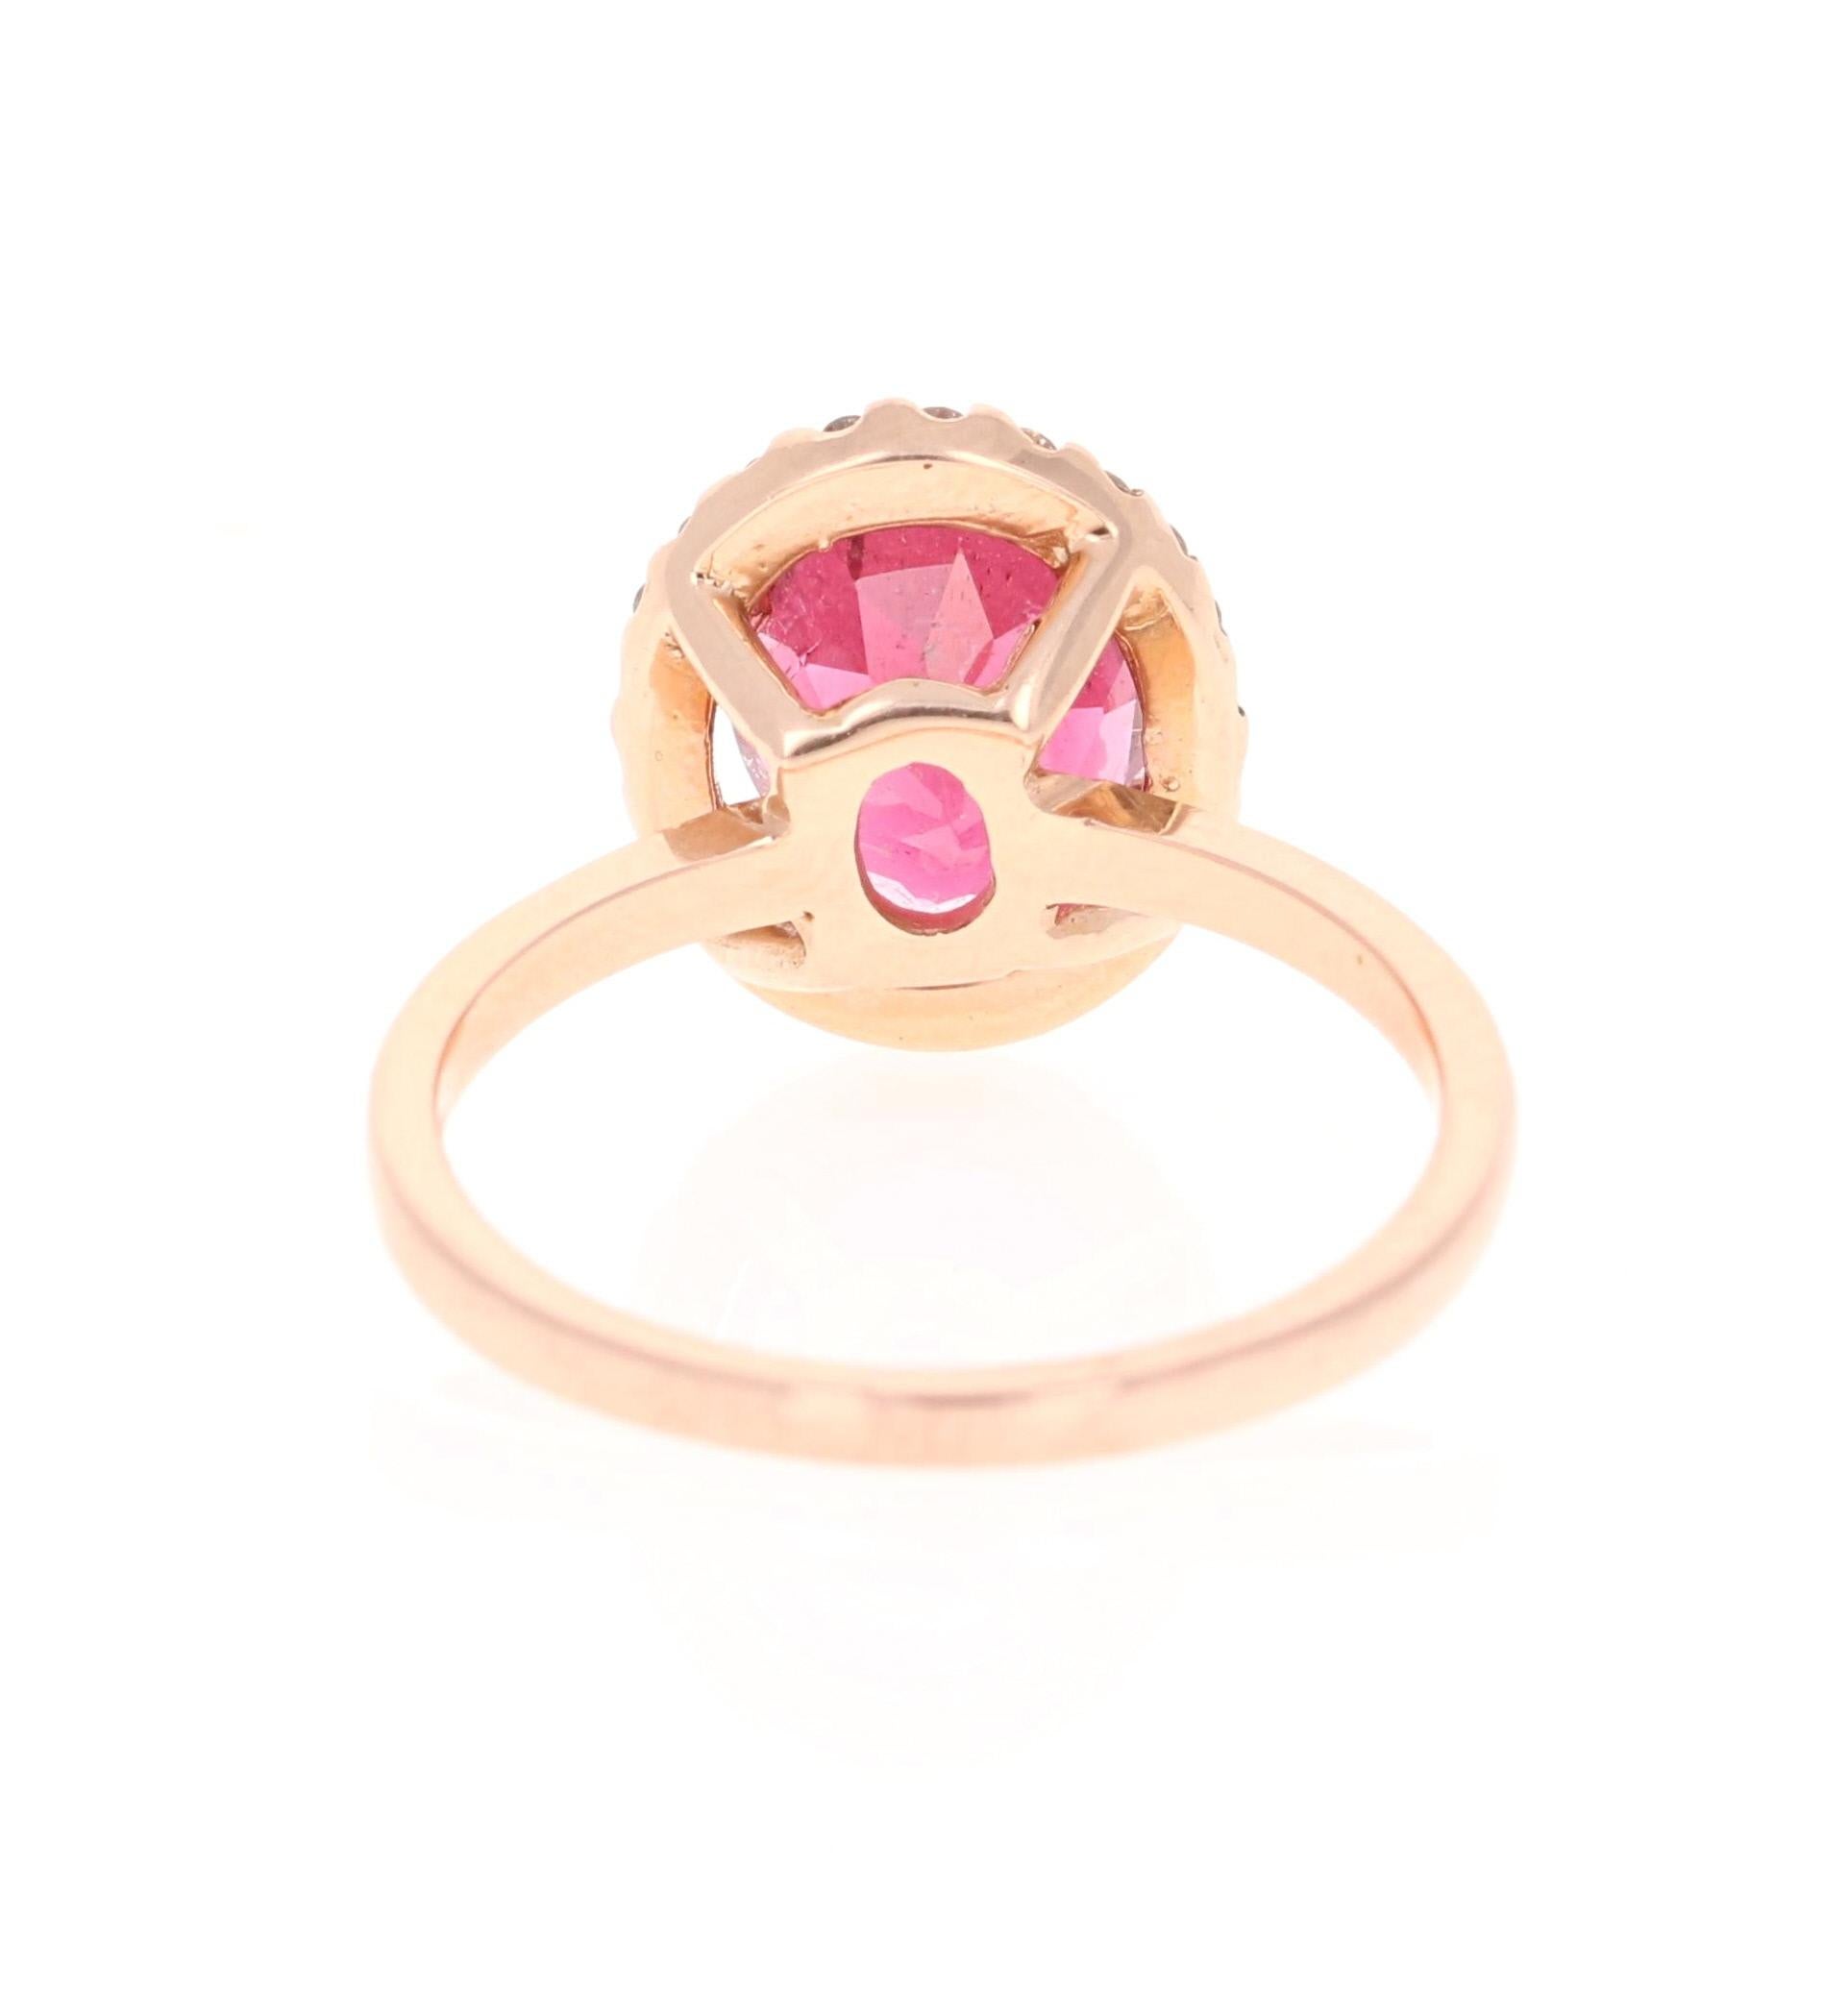 Oval Cut 3.11 Carat Pink Tourmaline Diamond 14 Karat Rose Gold Engagement Ring For Sale